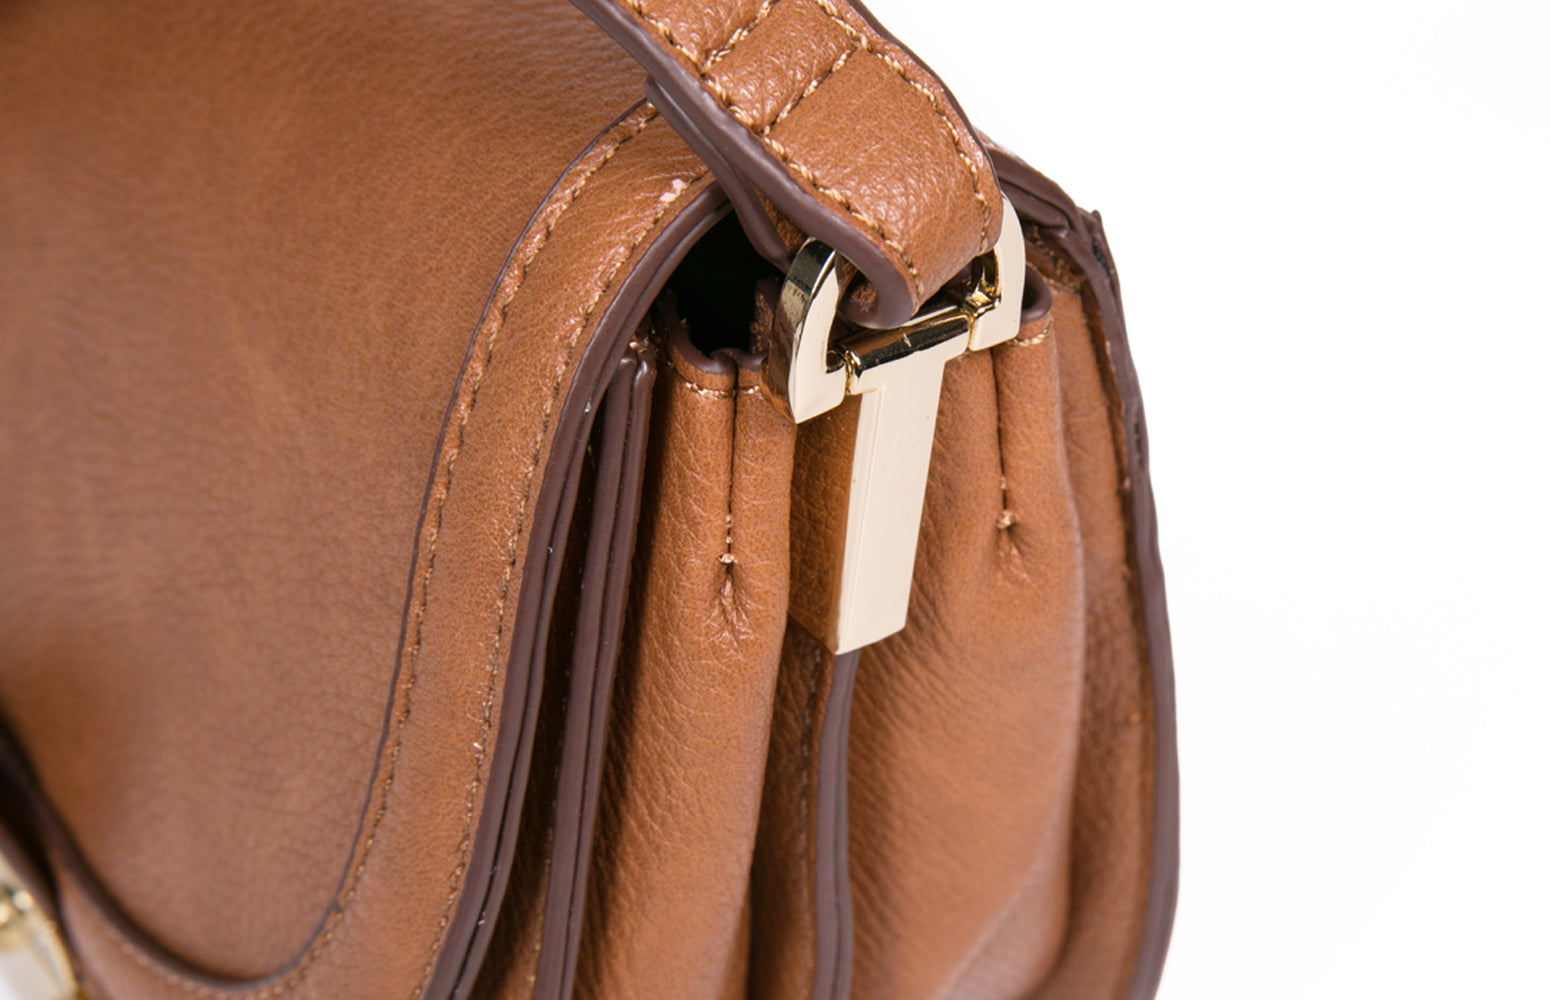 Feversole Crossbody Bag PU Leather Women Retro Small Saddle Satchel Shoulder Bag Tote With Long Adjustable Strap Camel